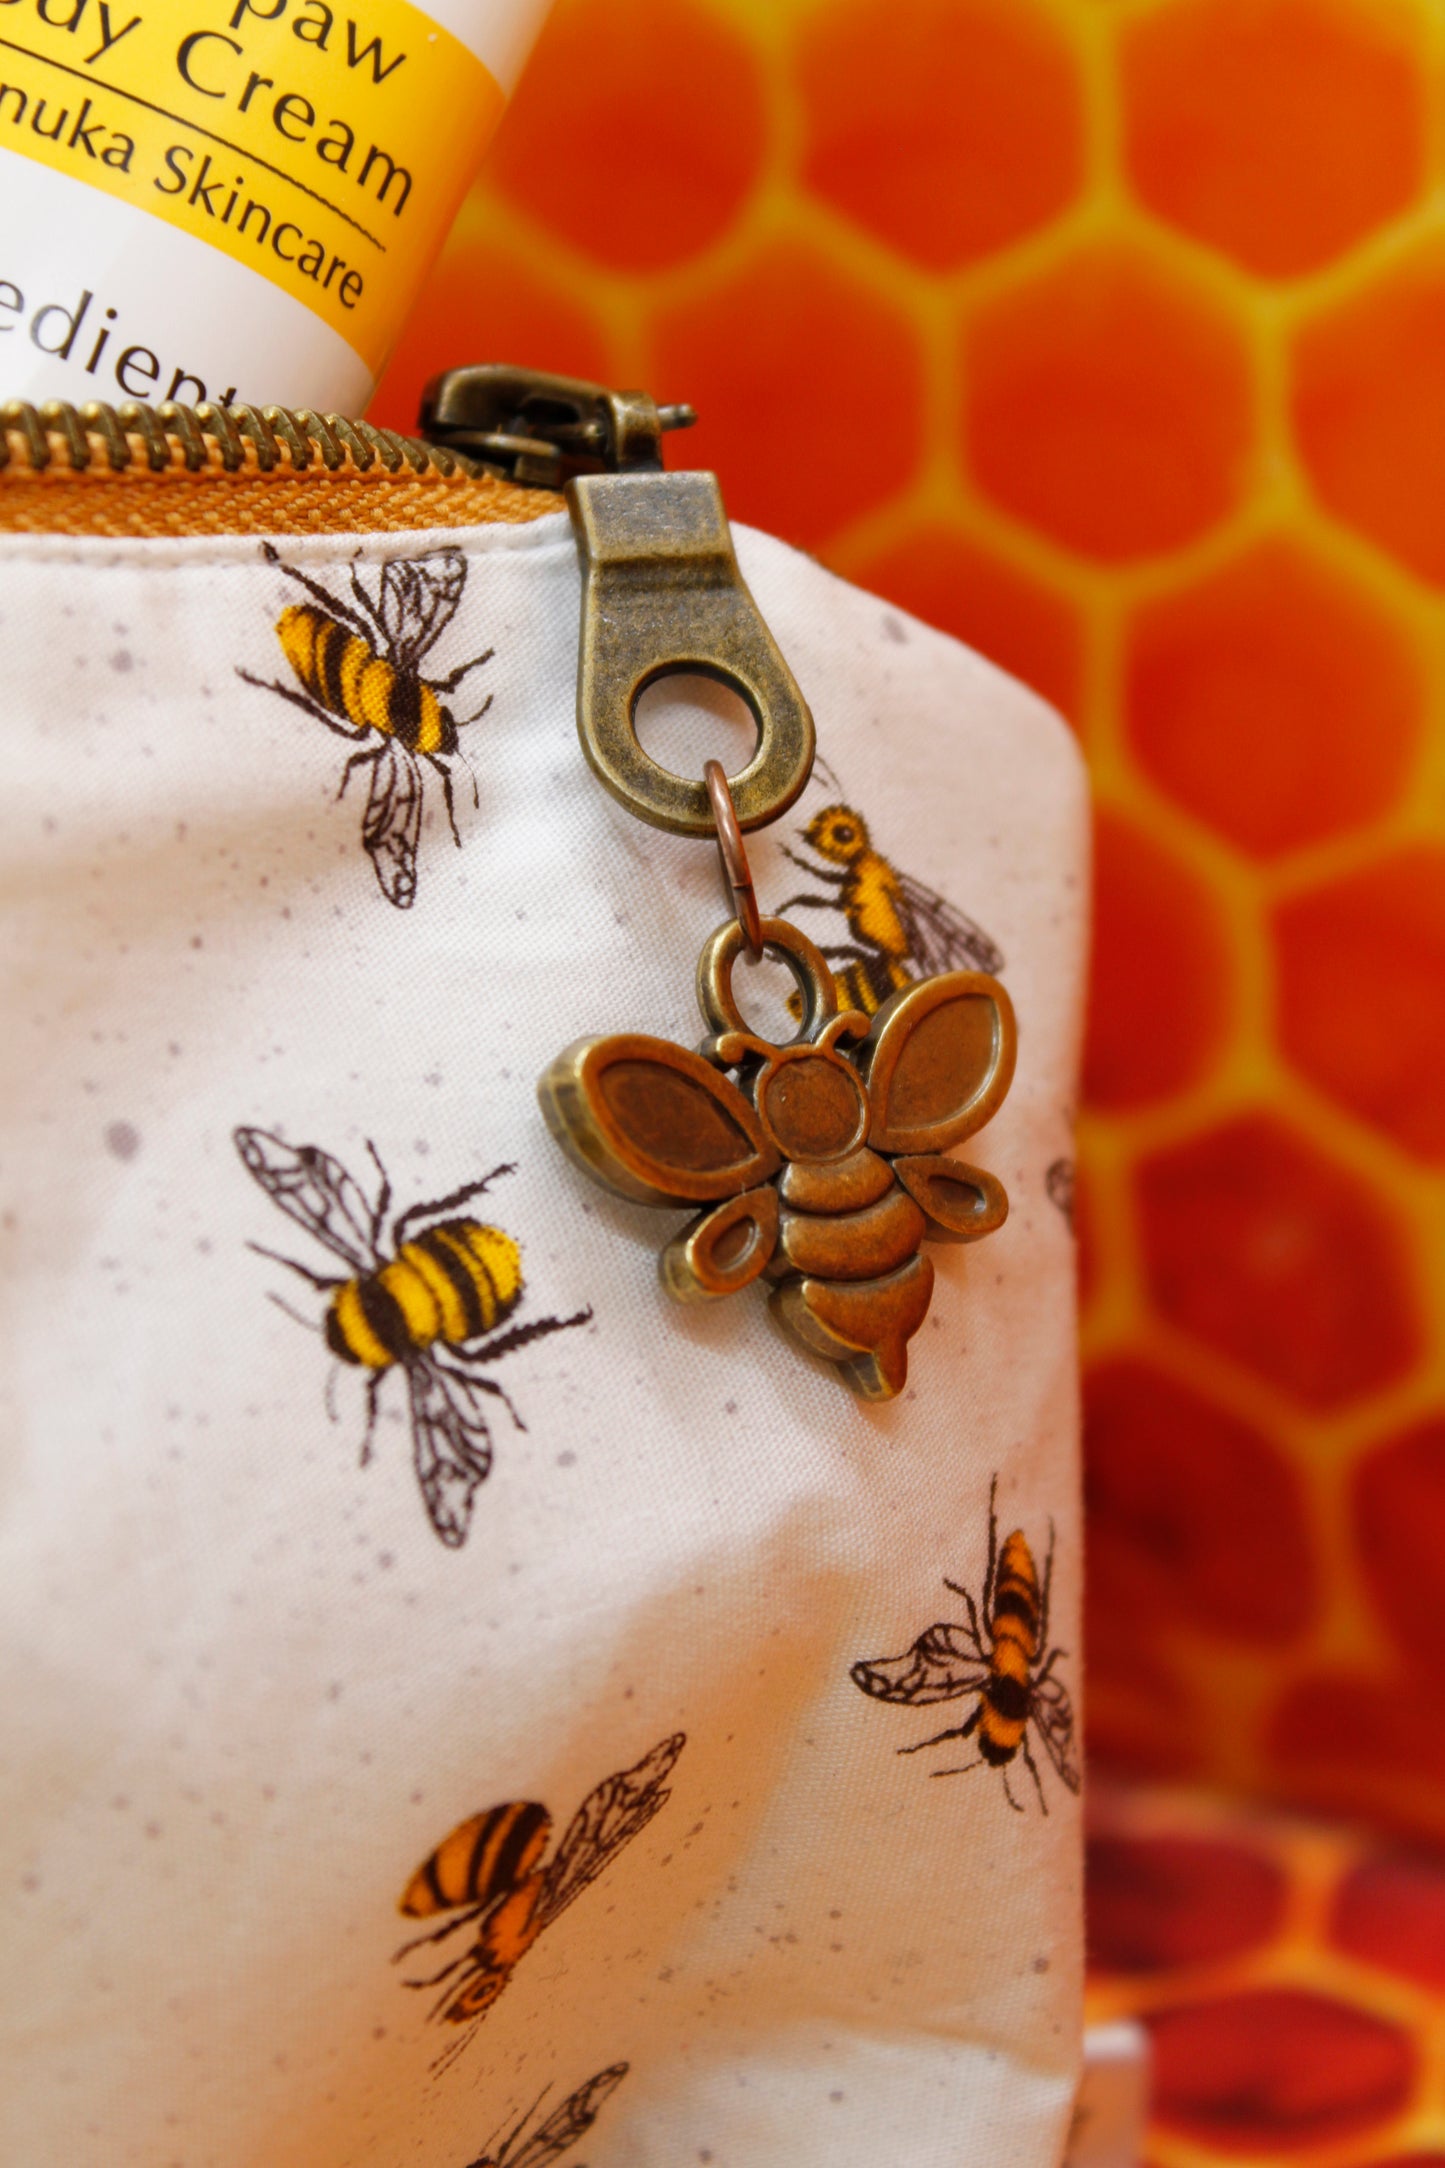 Skincare zip bag - White Bees